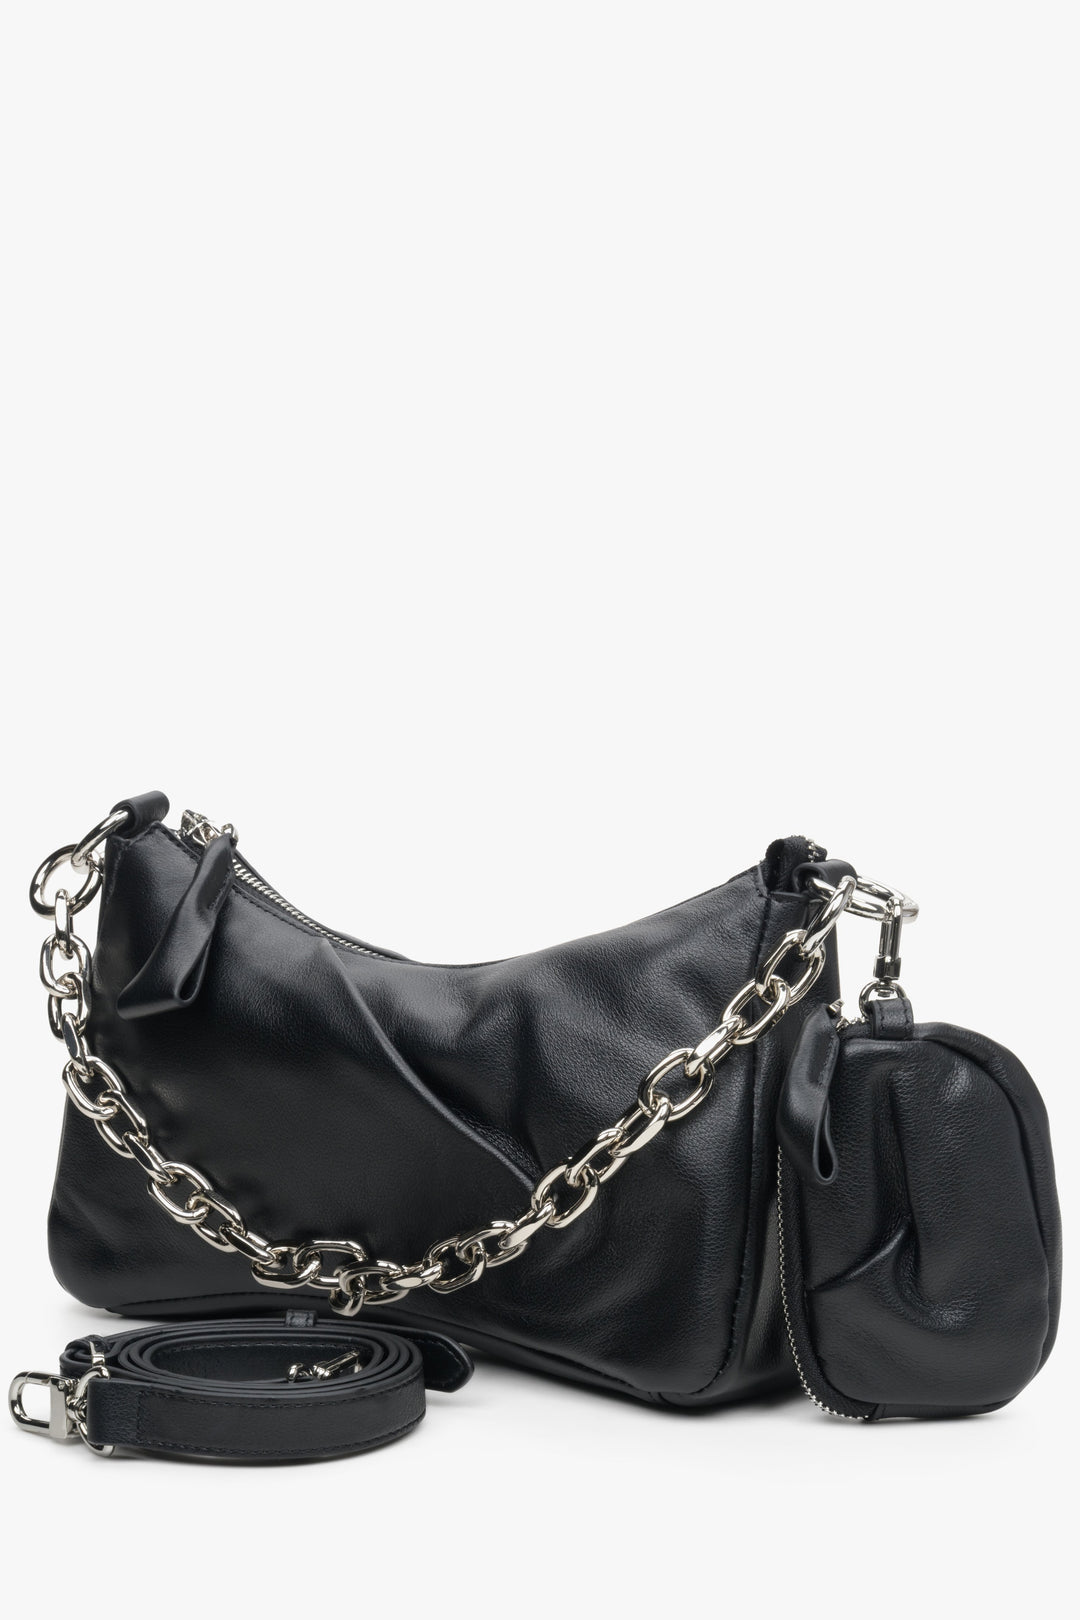 Estro's women's black leather bag with an elegant chain strap.